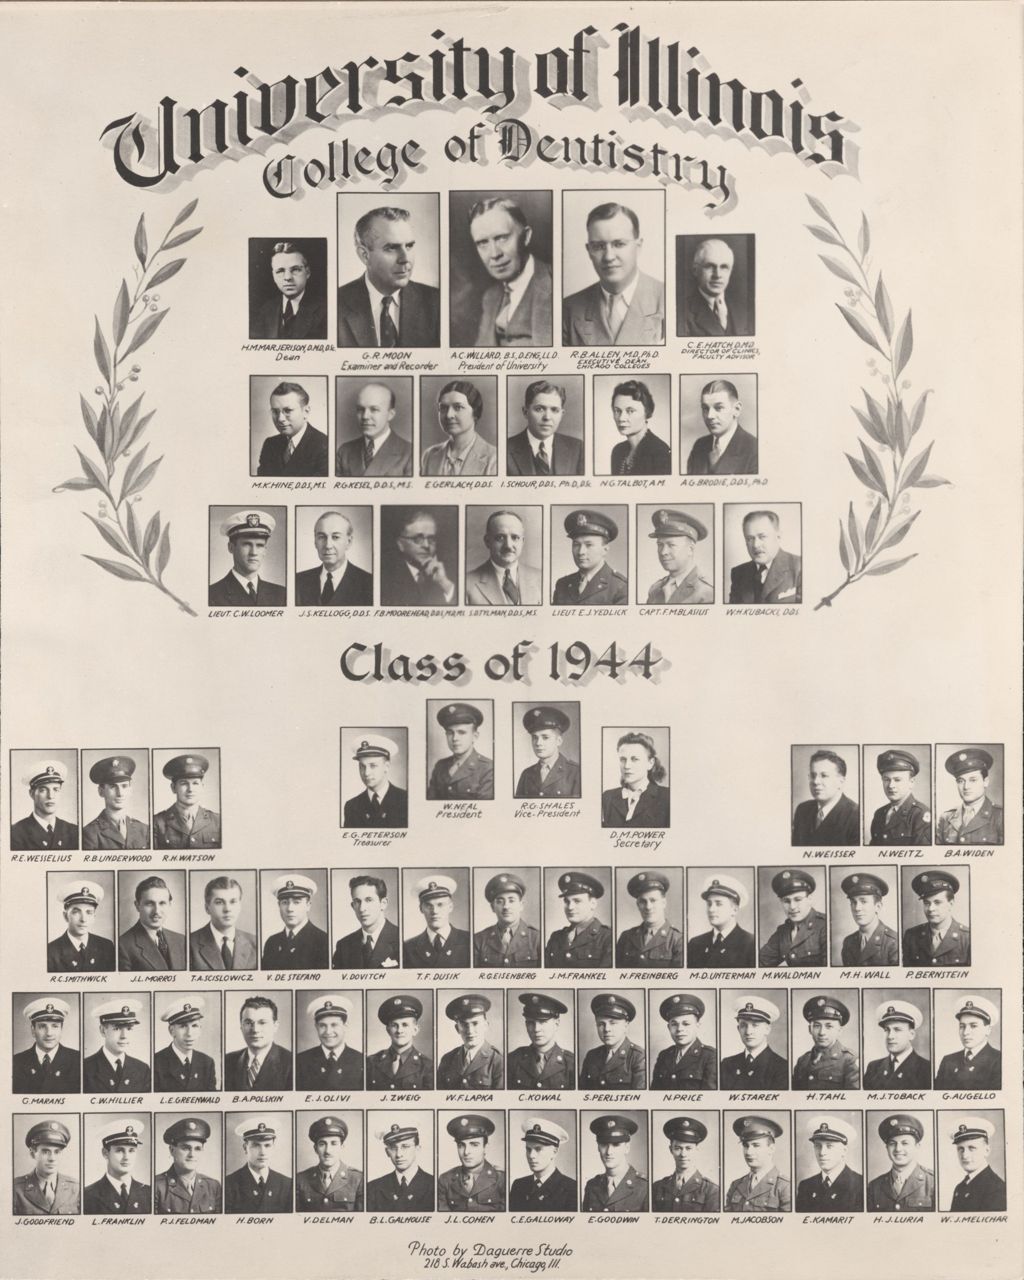 Miniature of 1944 graduating class, University of Illinois College of Dentistry